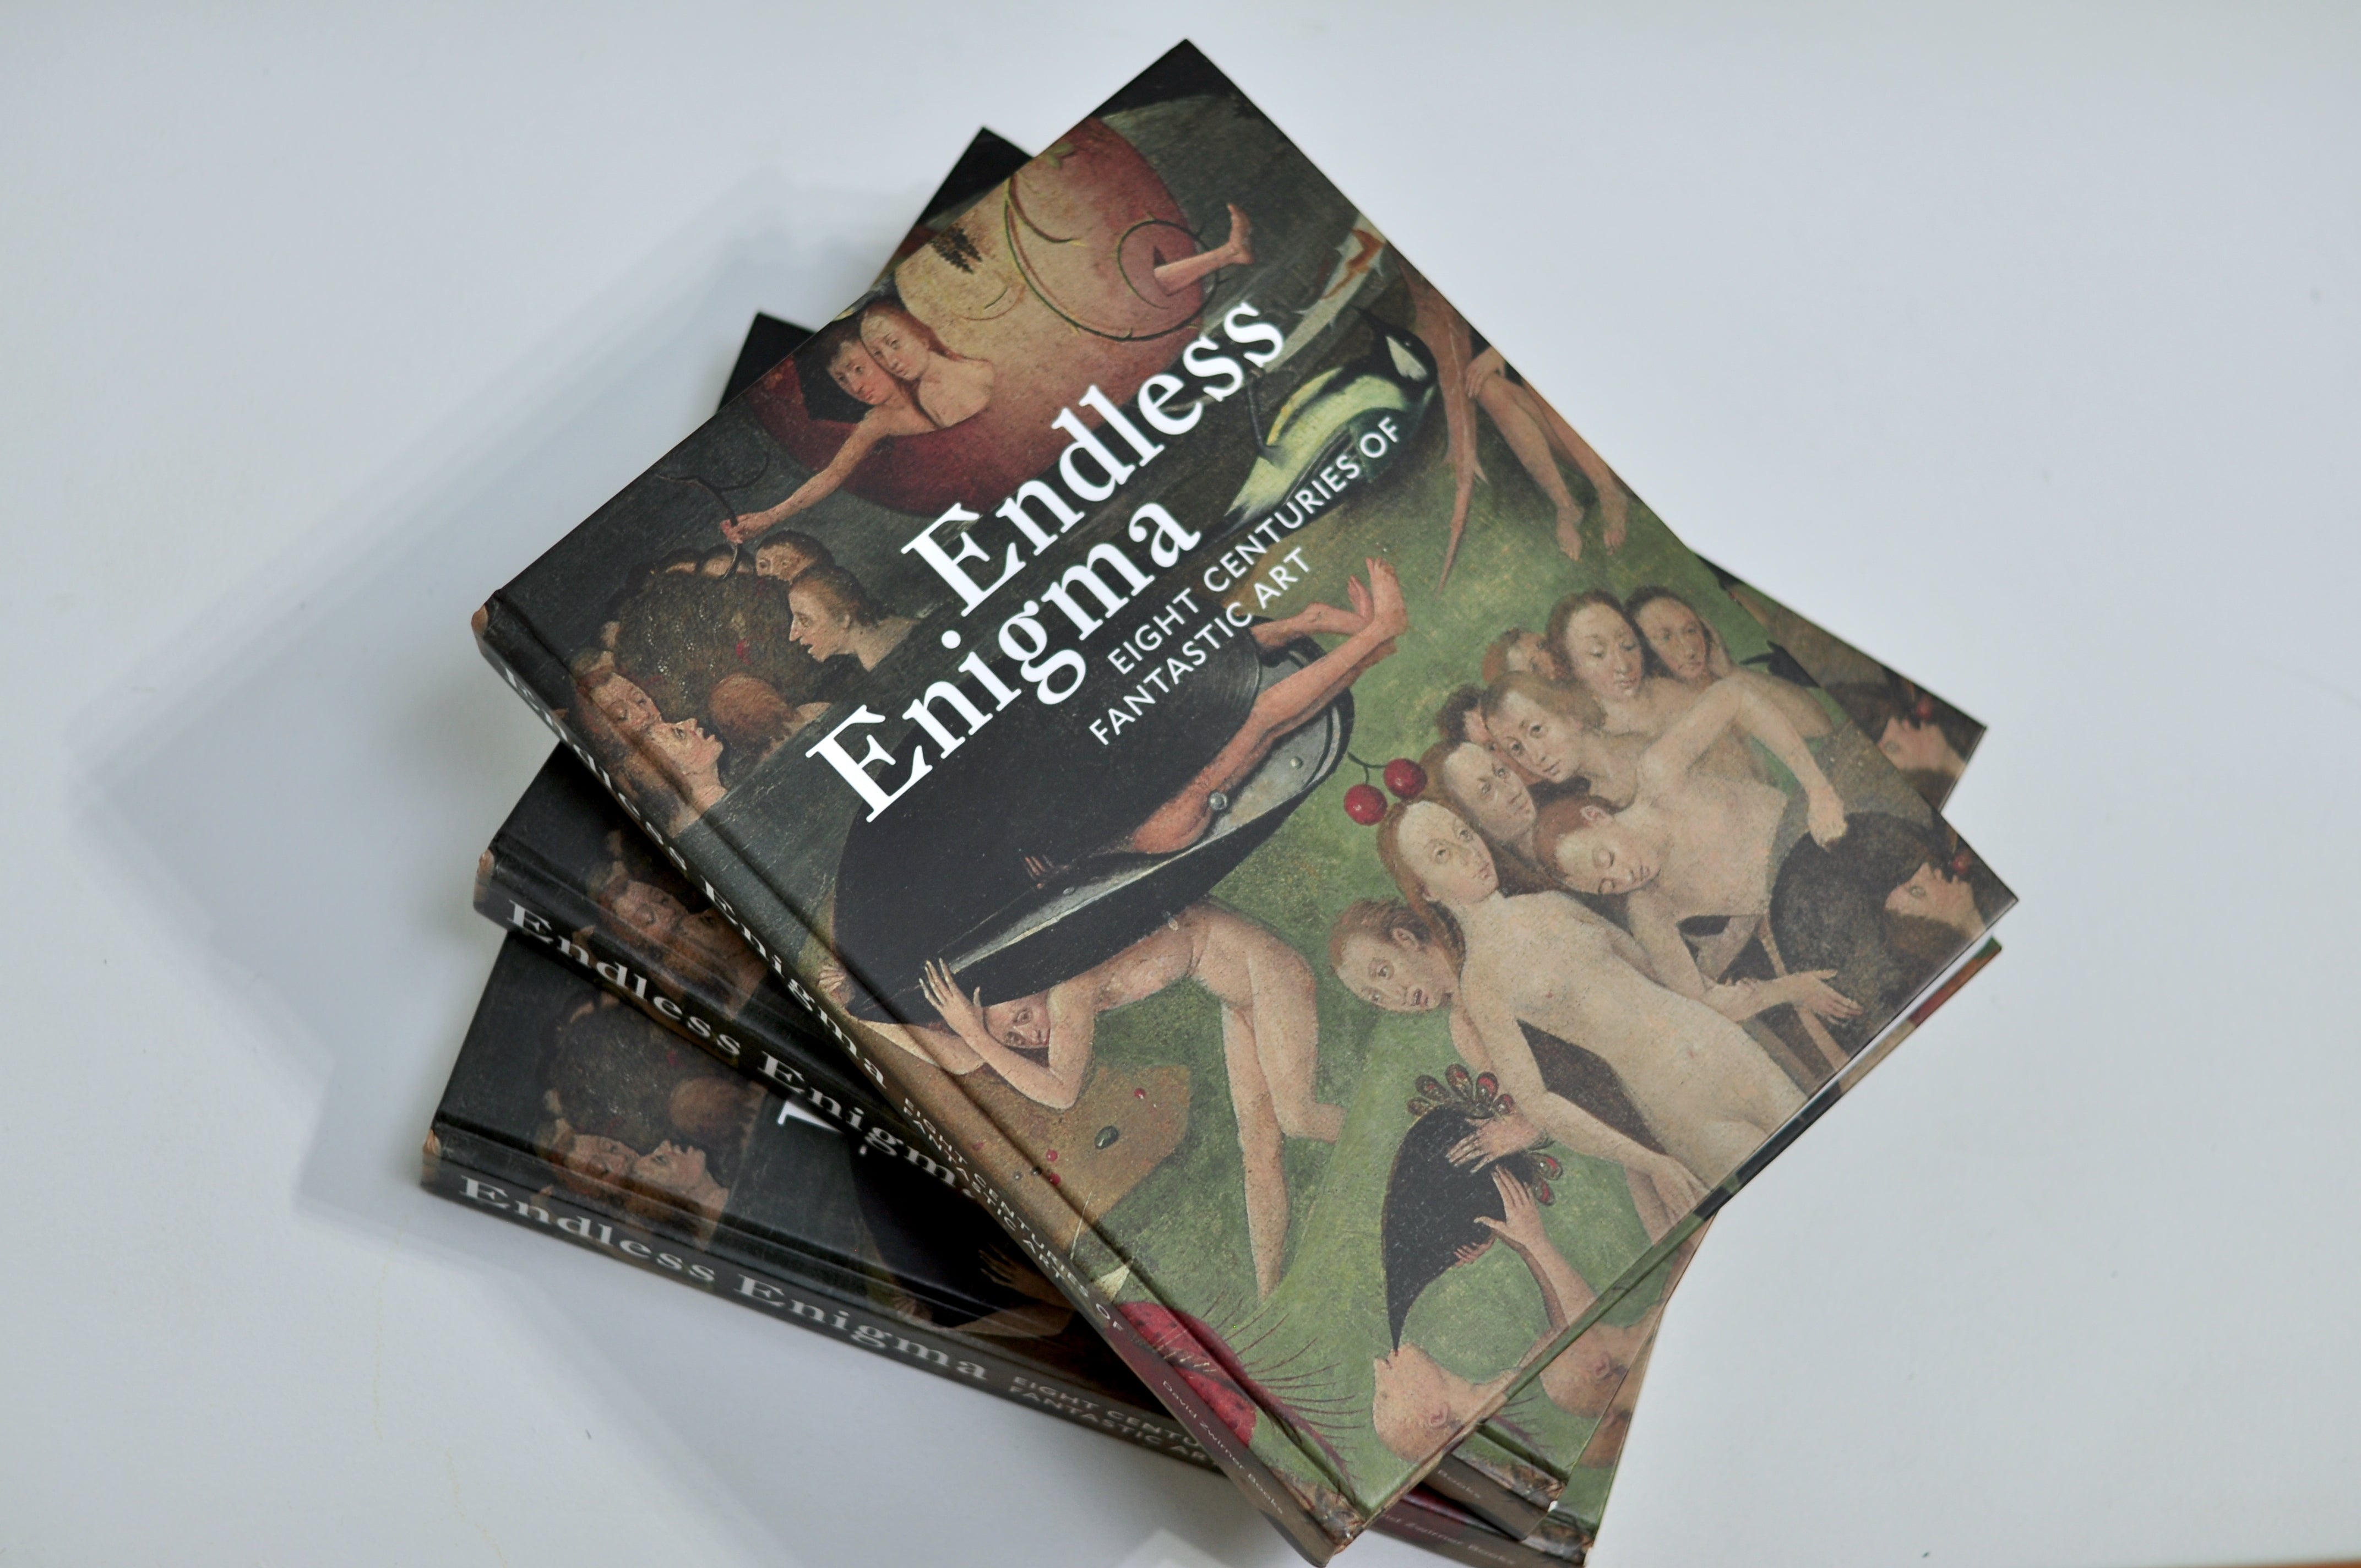 Endless Enigma: Eight Centuries of Fantastic Art